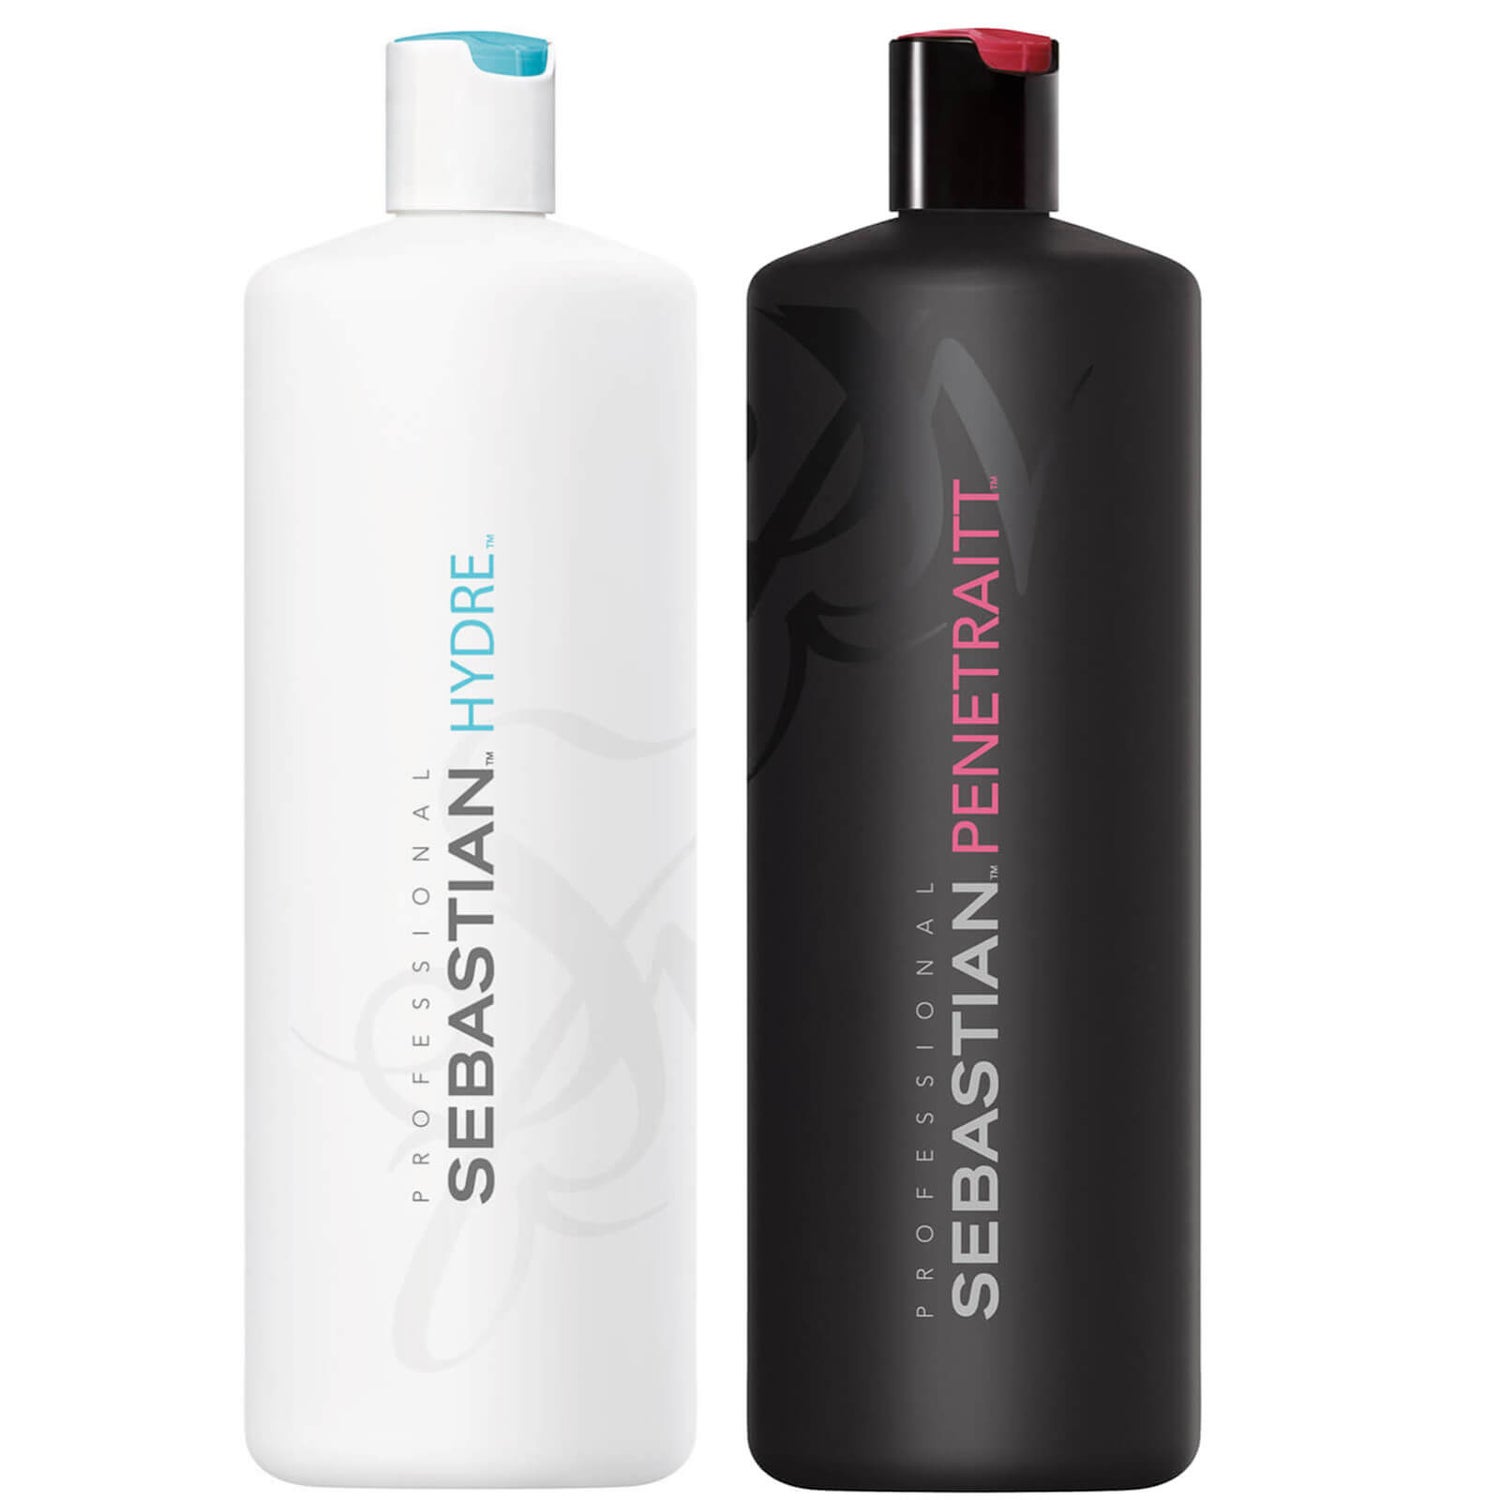 Sebastian Professional Penetraitt Shampoo and Conditioner Super Size Regime Bundle